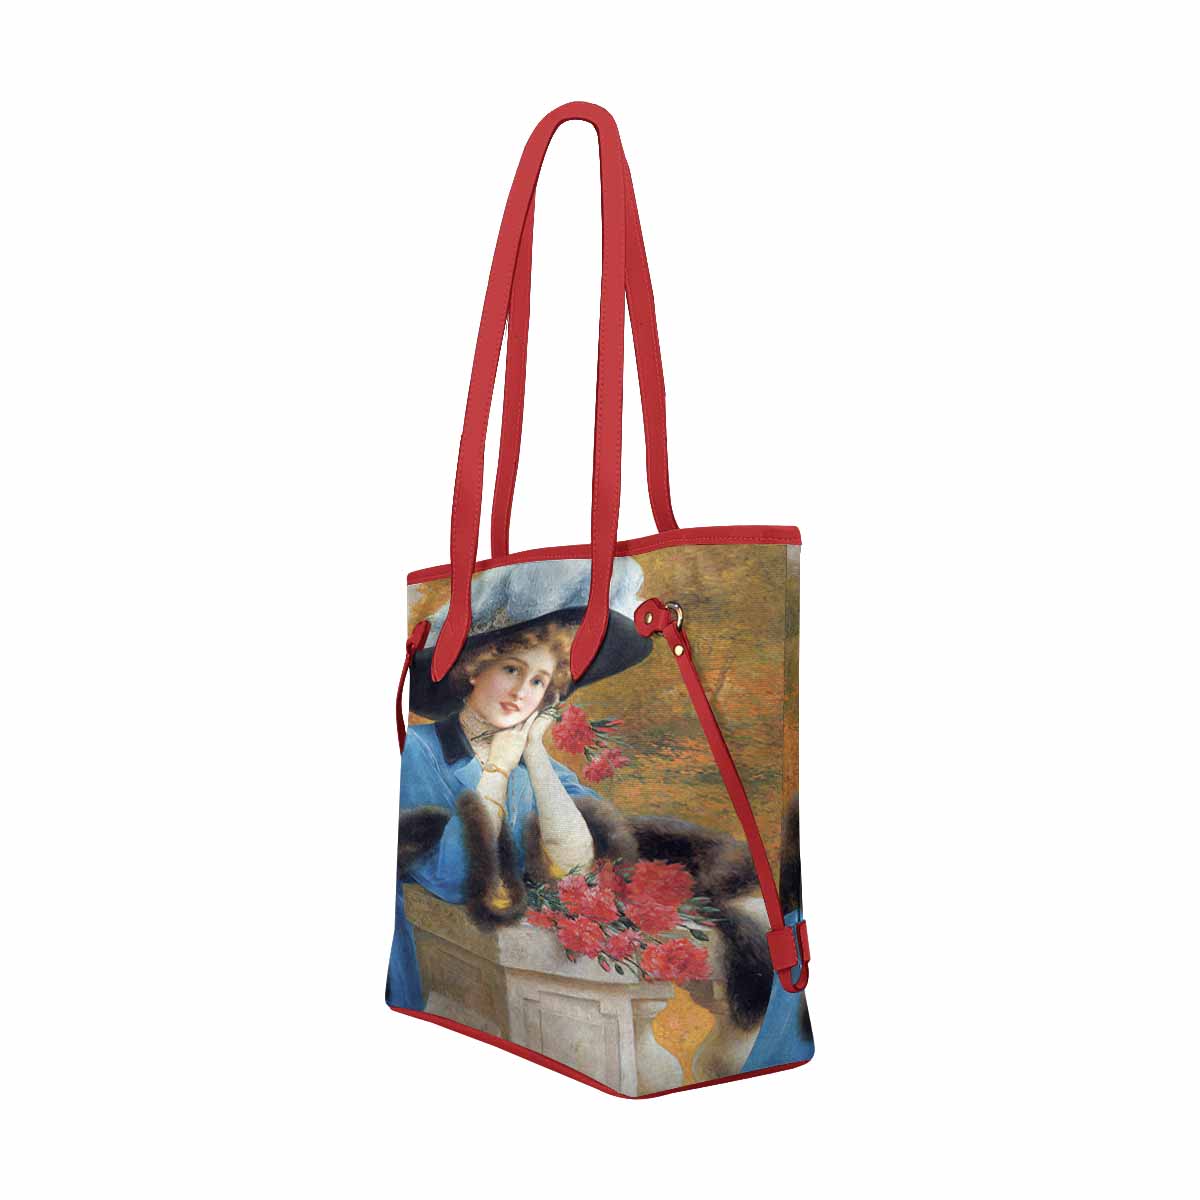 Victorian Lady Design Handbag, Model 1695361, Carnations Are For Love, RED TRIM